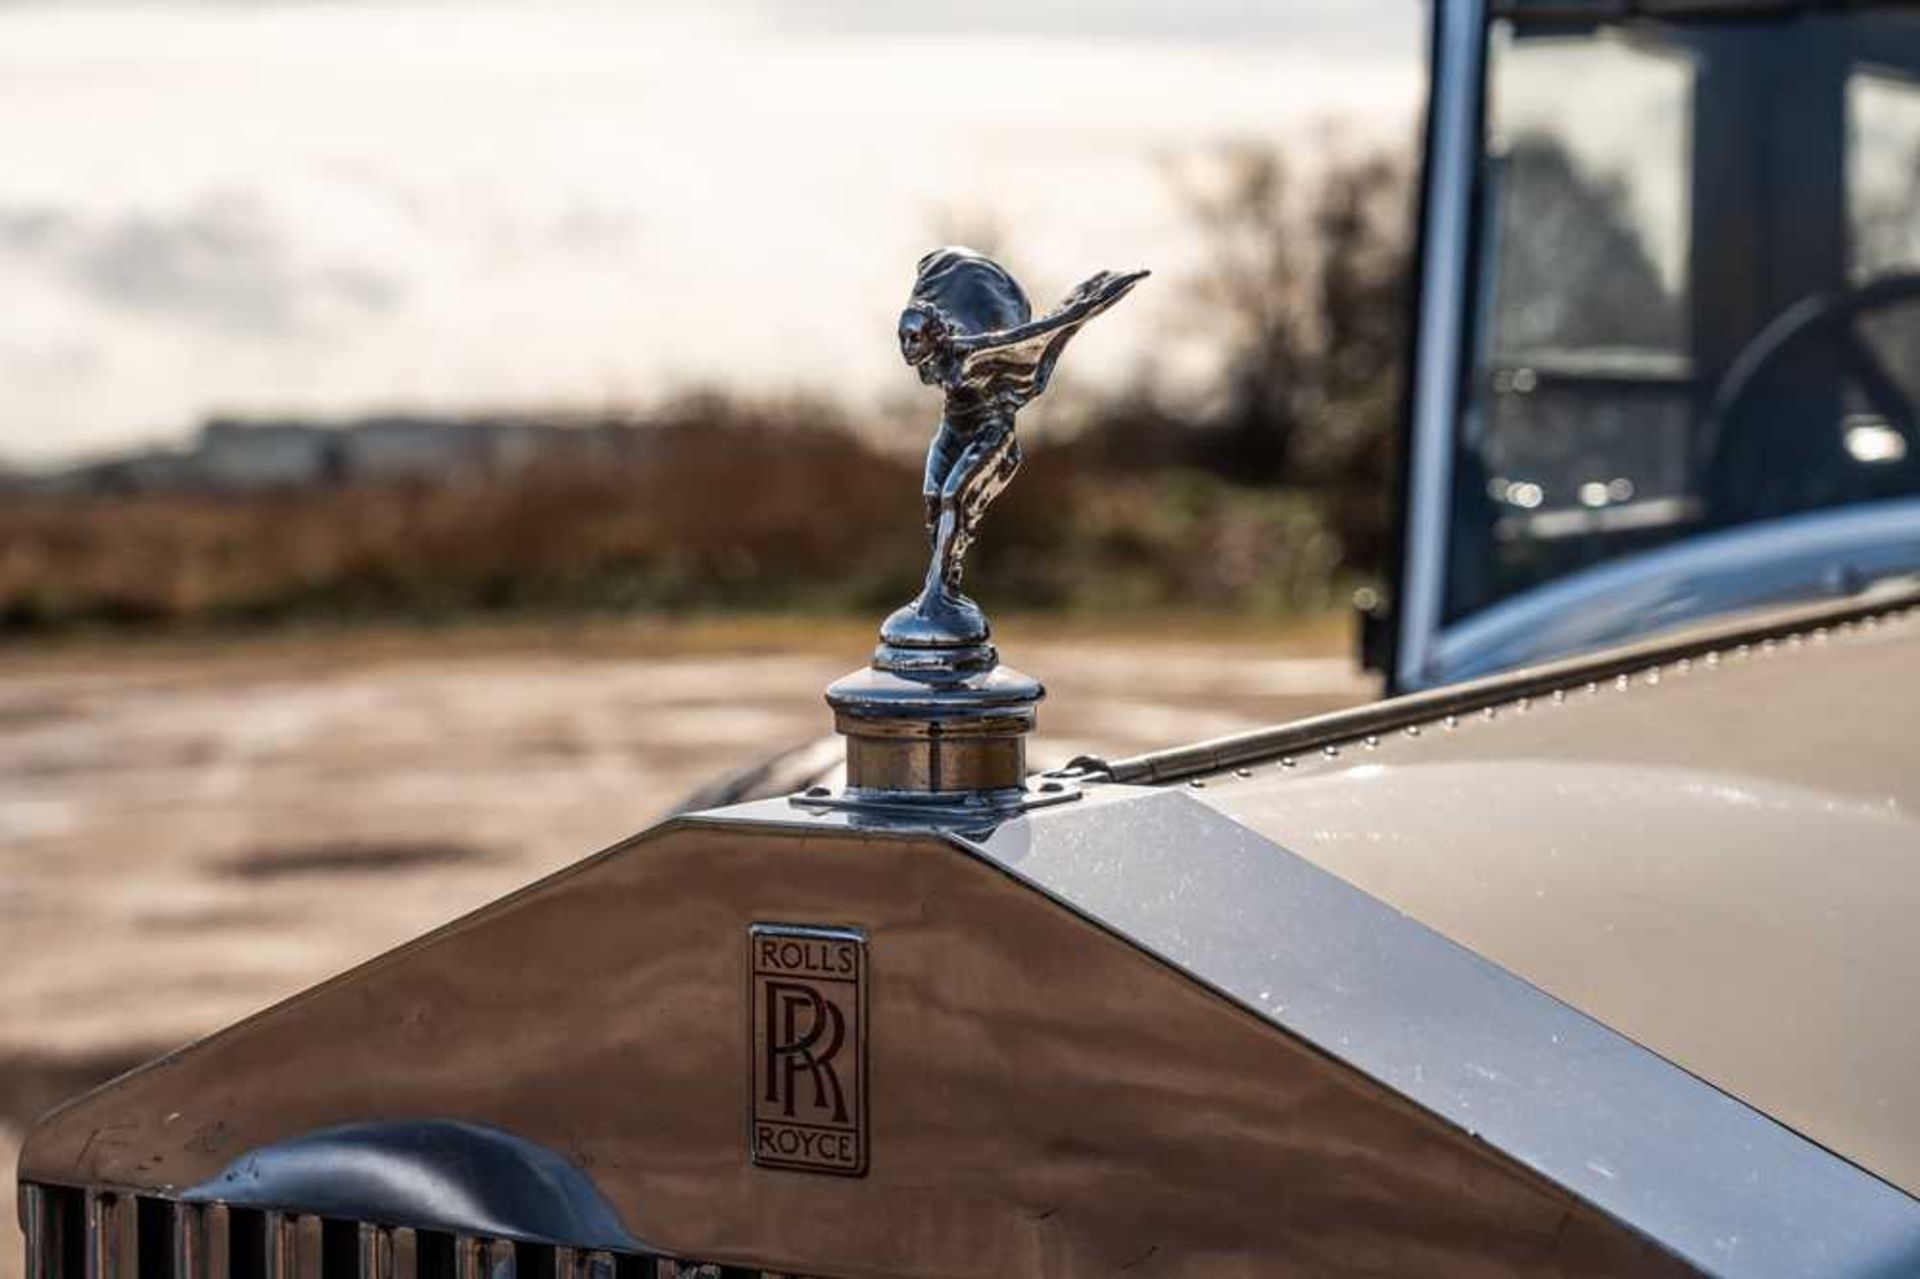 1929 Rolls-Royce Phantom II Limousine Coachwork by Park Ward - Image 21 of 92